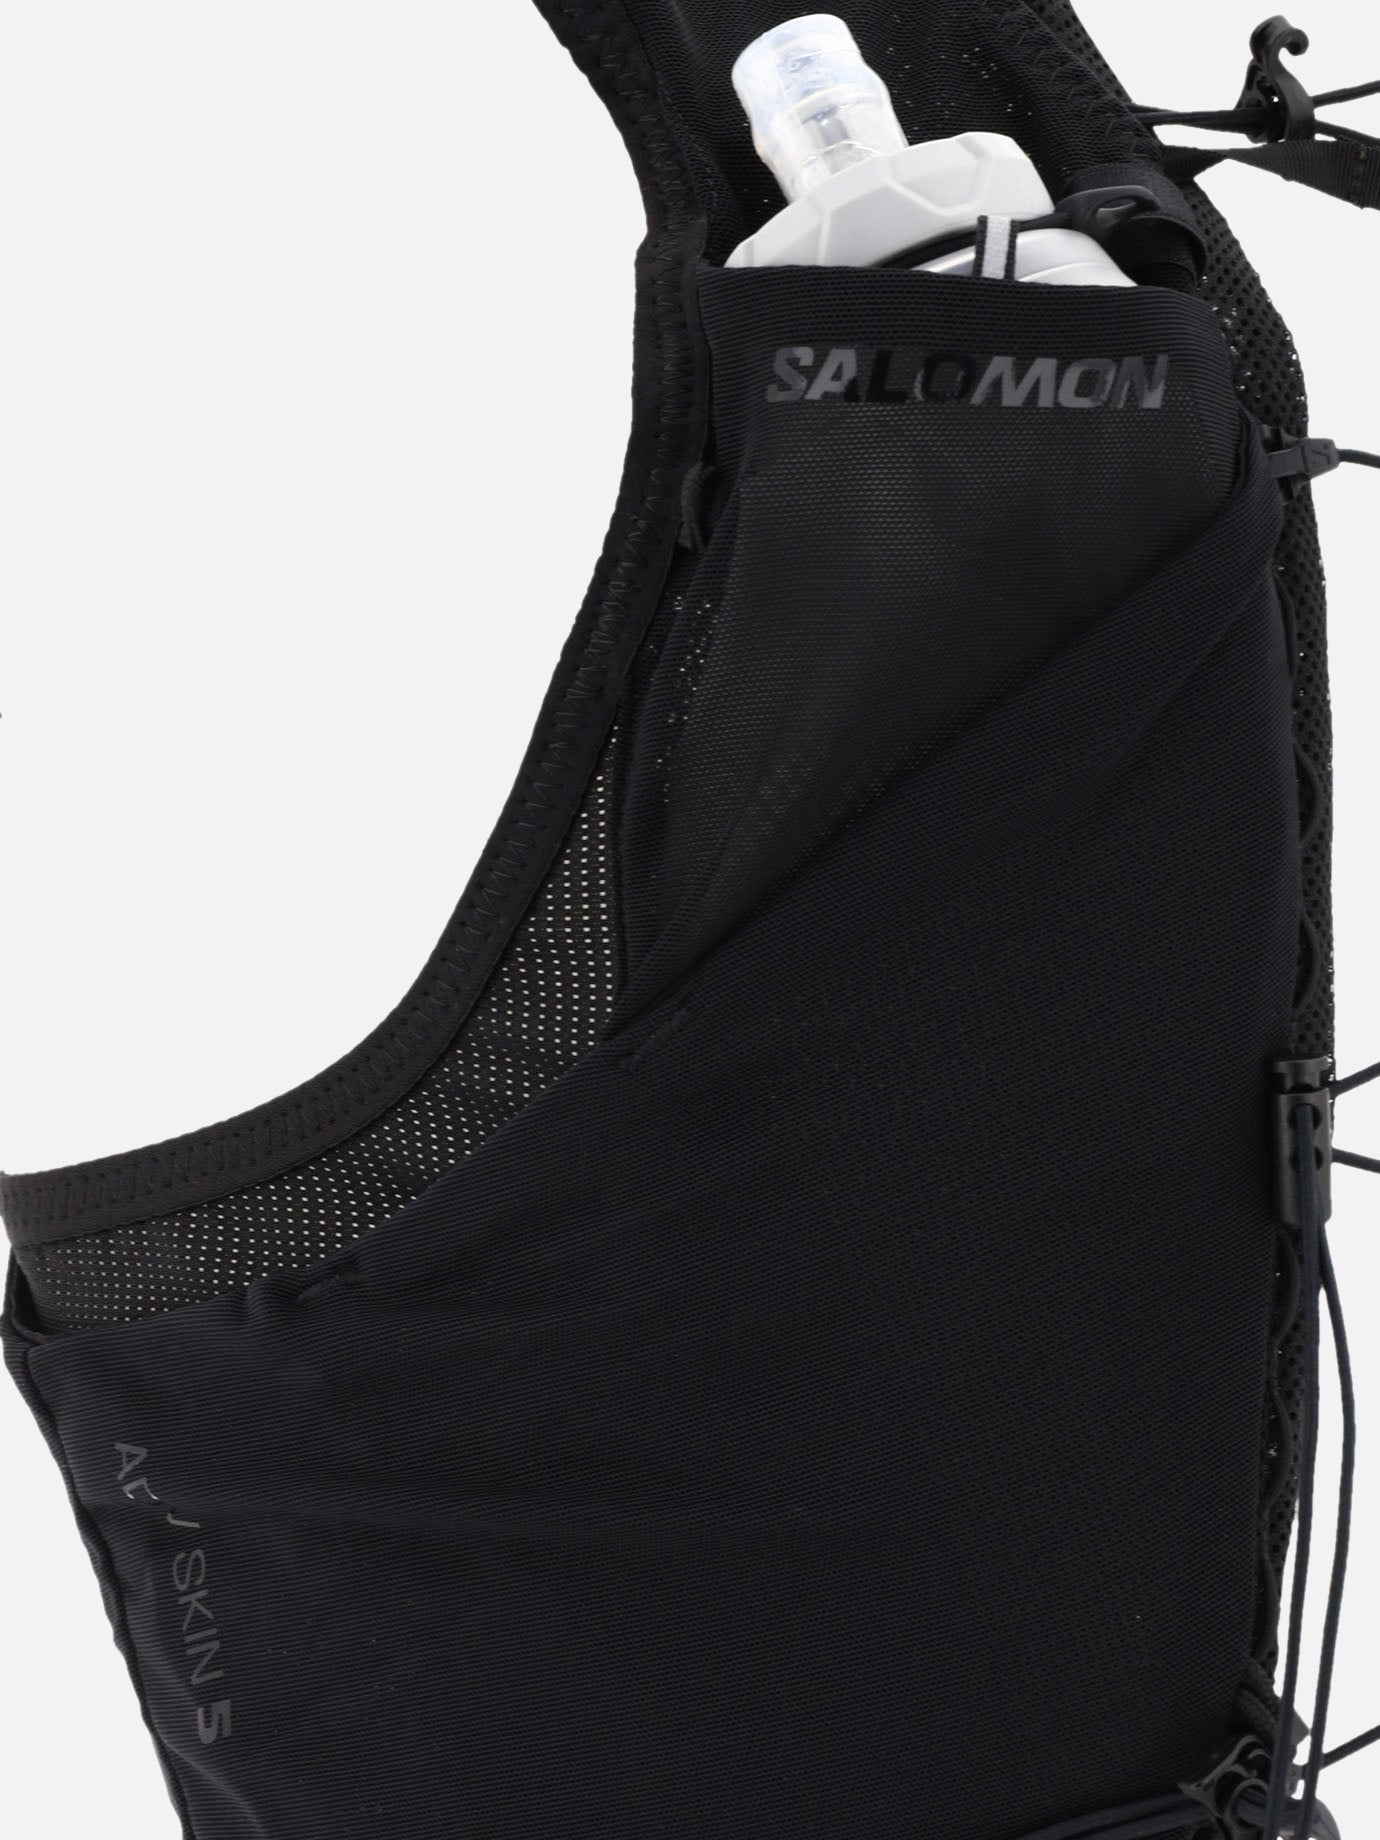 "ADV SKIN 5" running vest